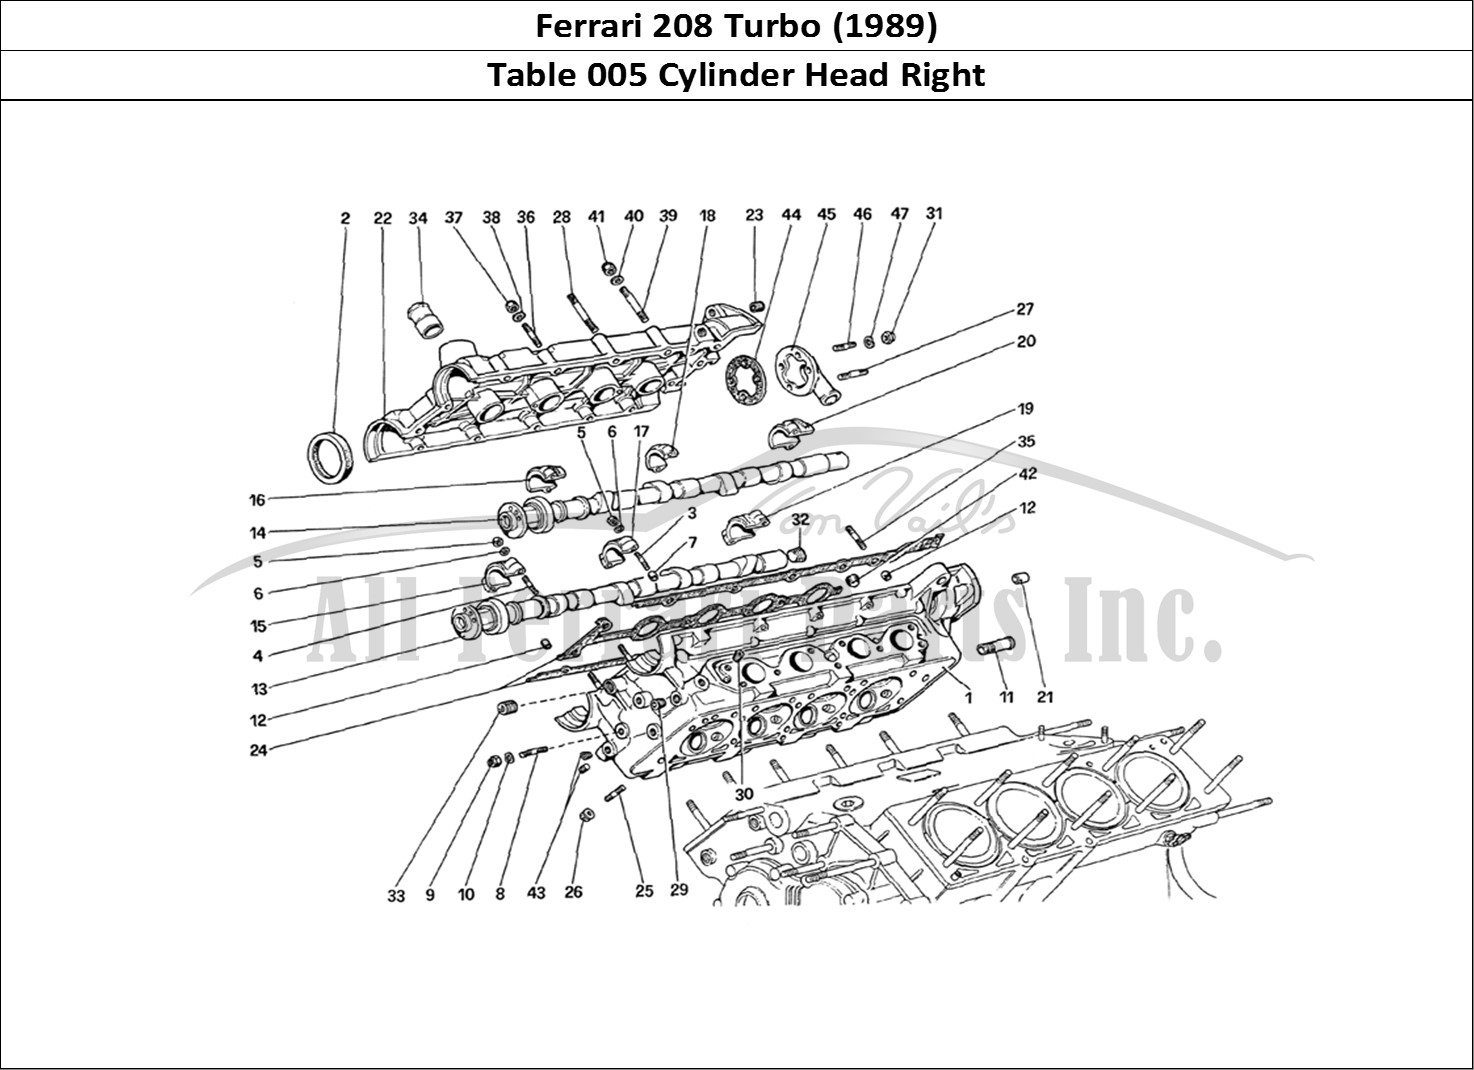 Ferrari Parts Ferrari 208 Turbo (1989) Page 005 Cylinder Head (Right)